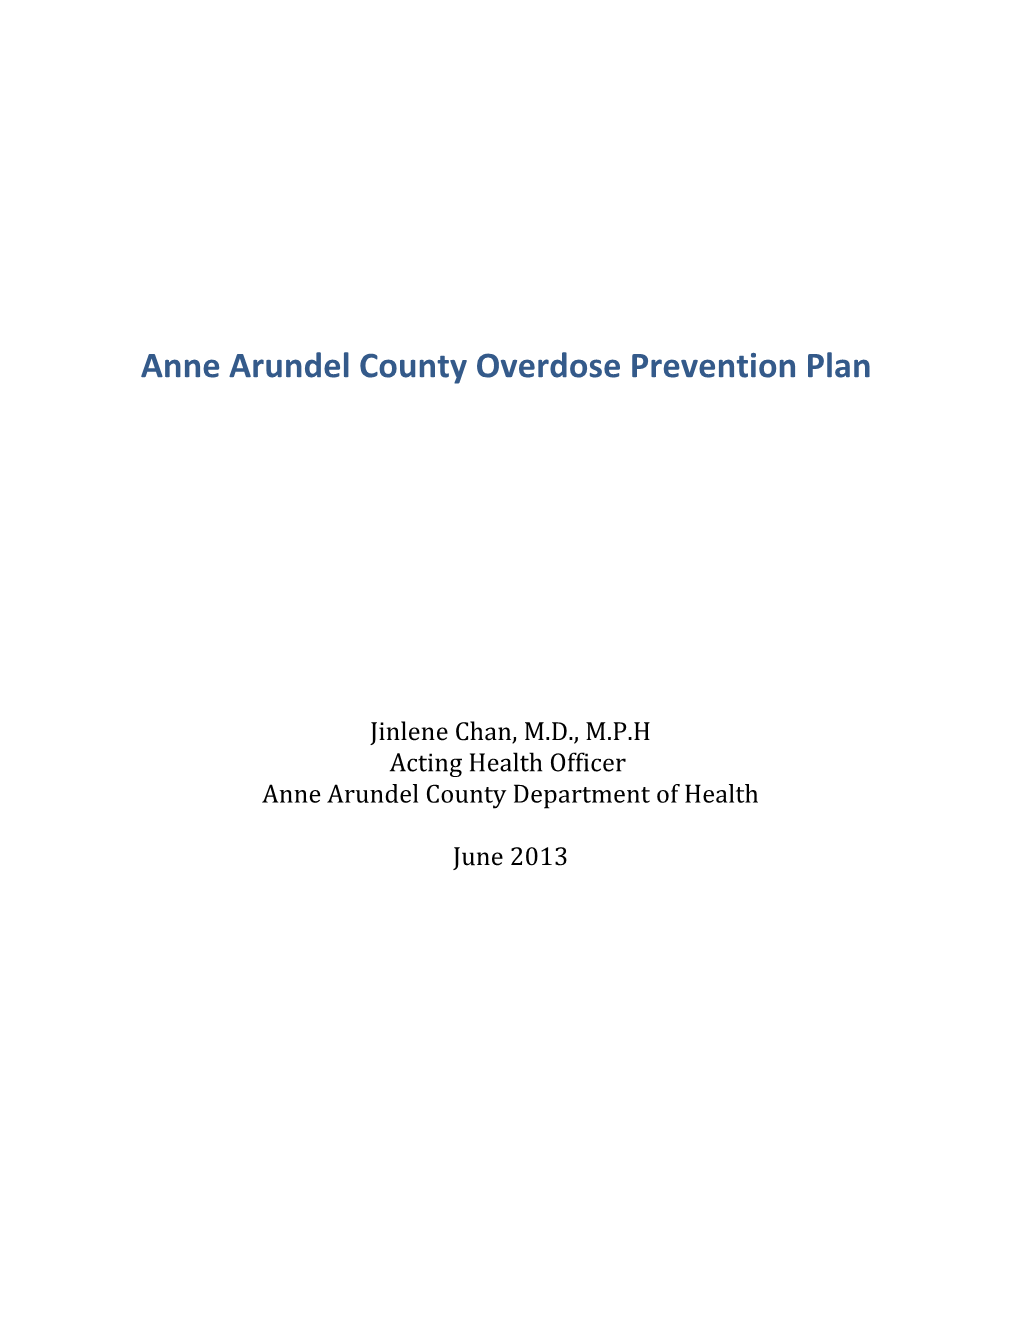 Anne Arundel County Overdose Prevention Program Plan